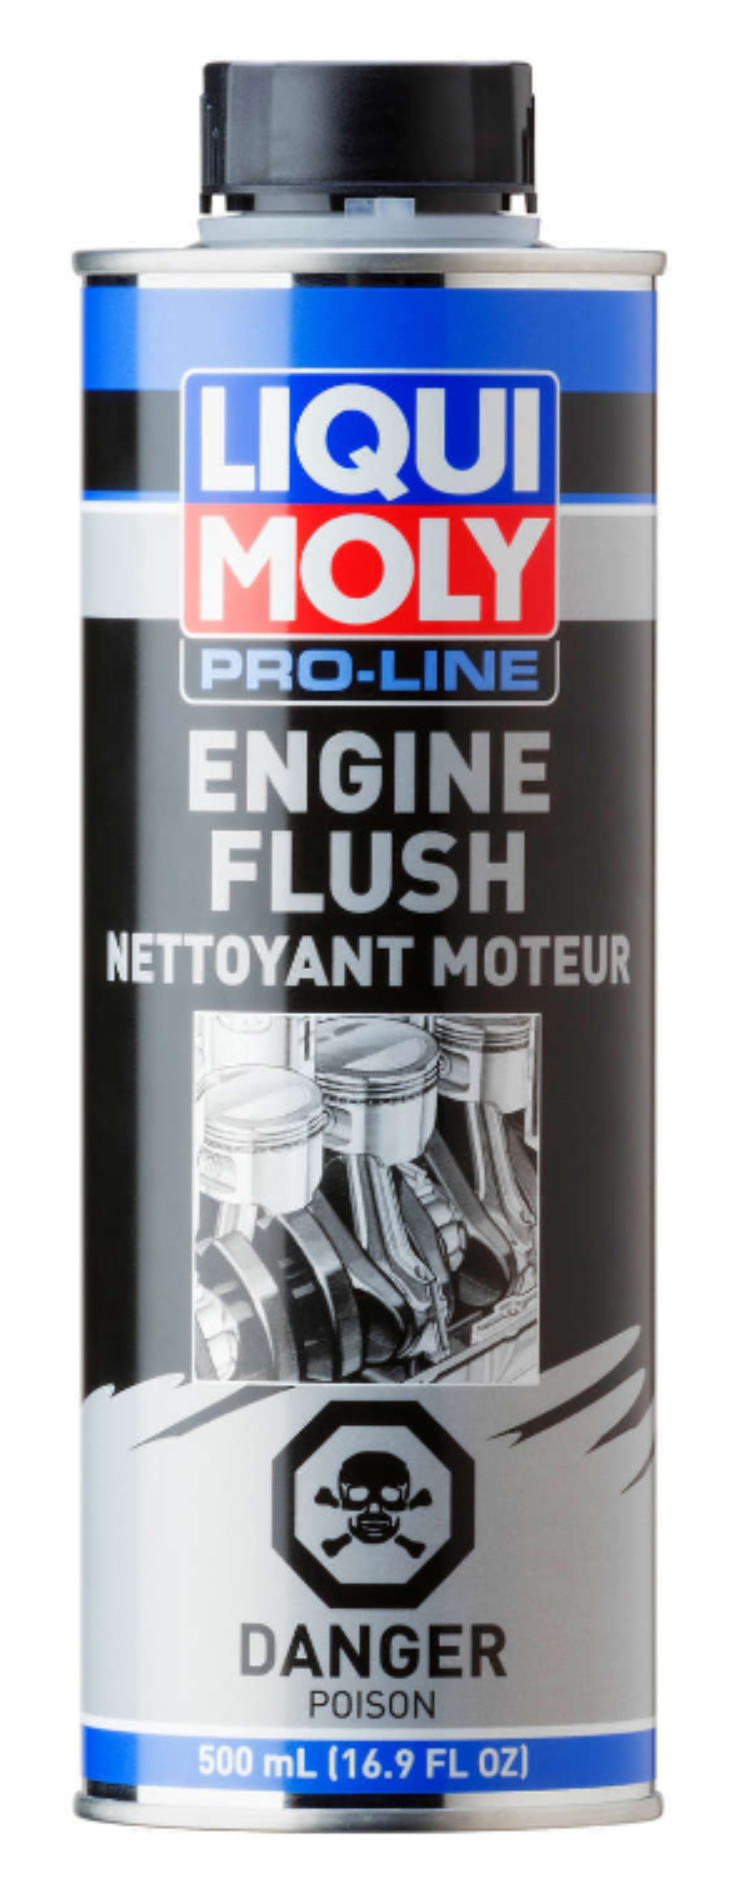 Pro-Line Engine Flush (500ml Can) - Liqui Moly LM7712